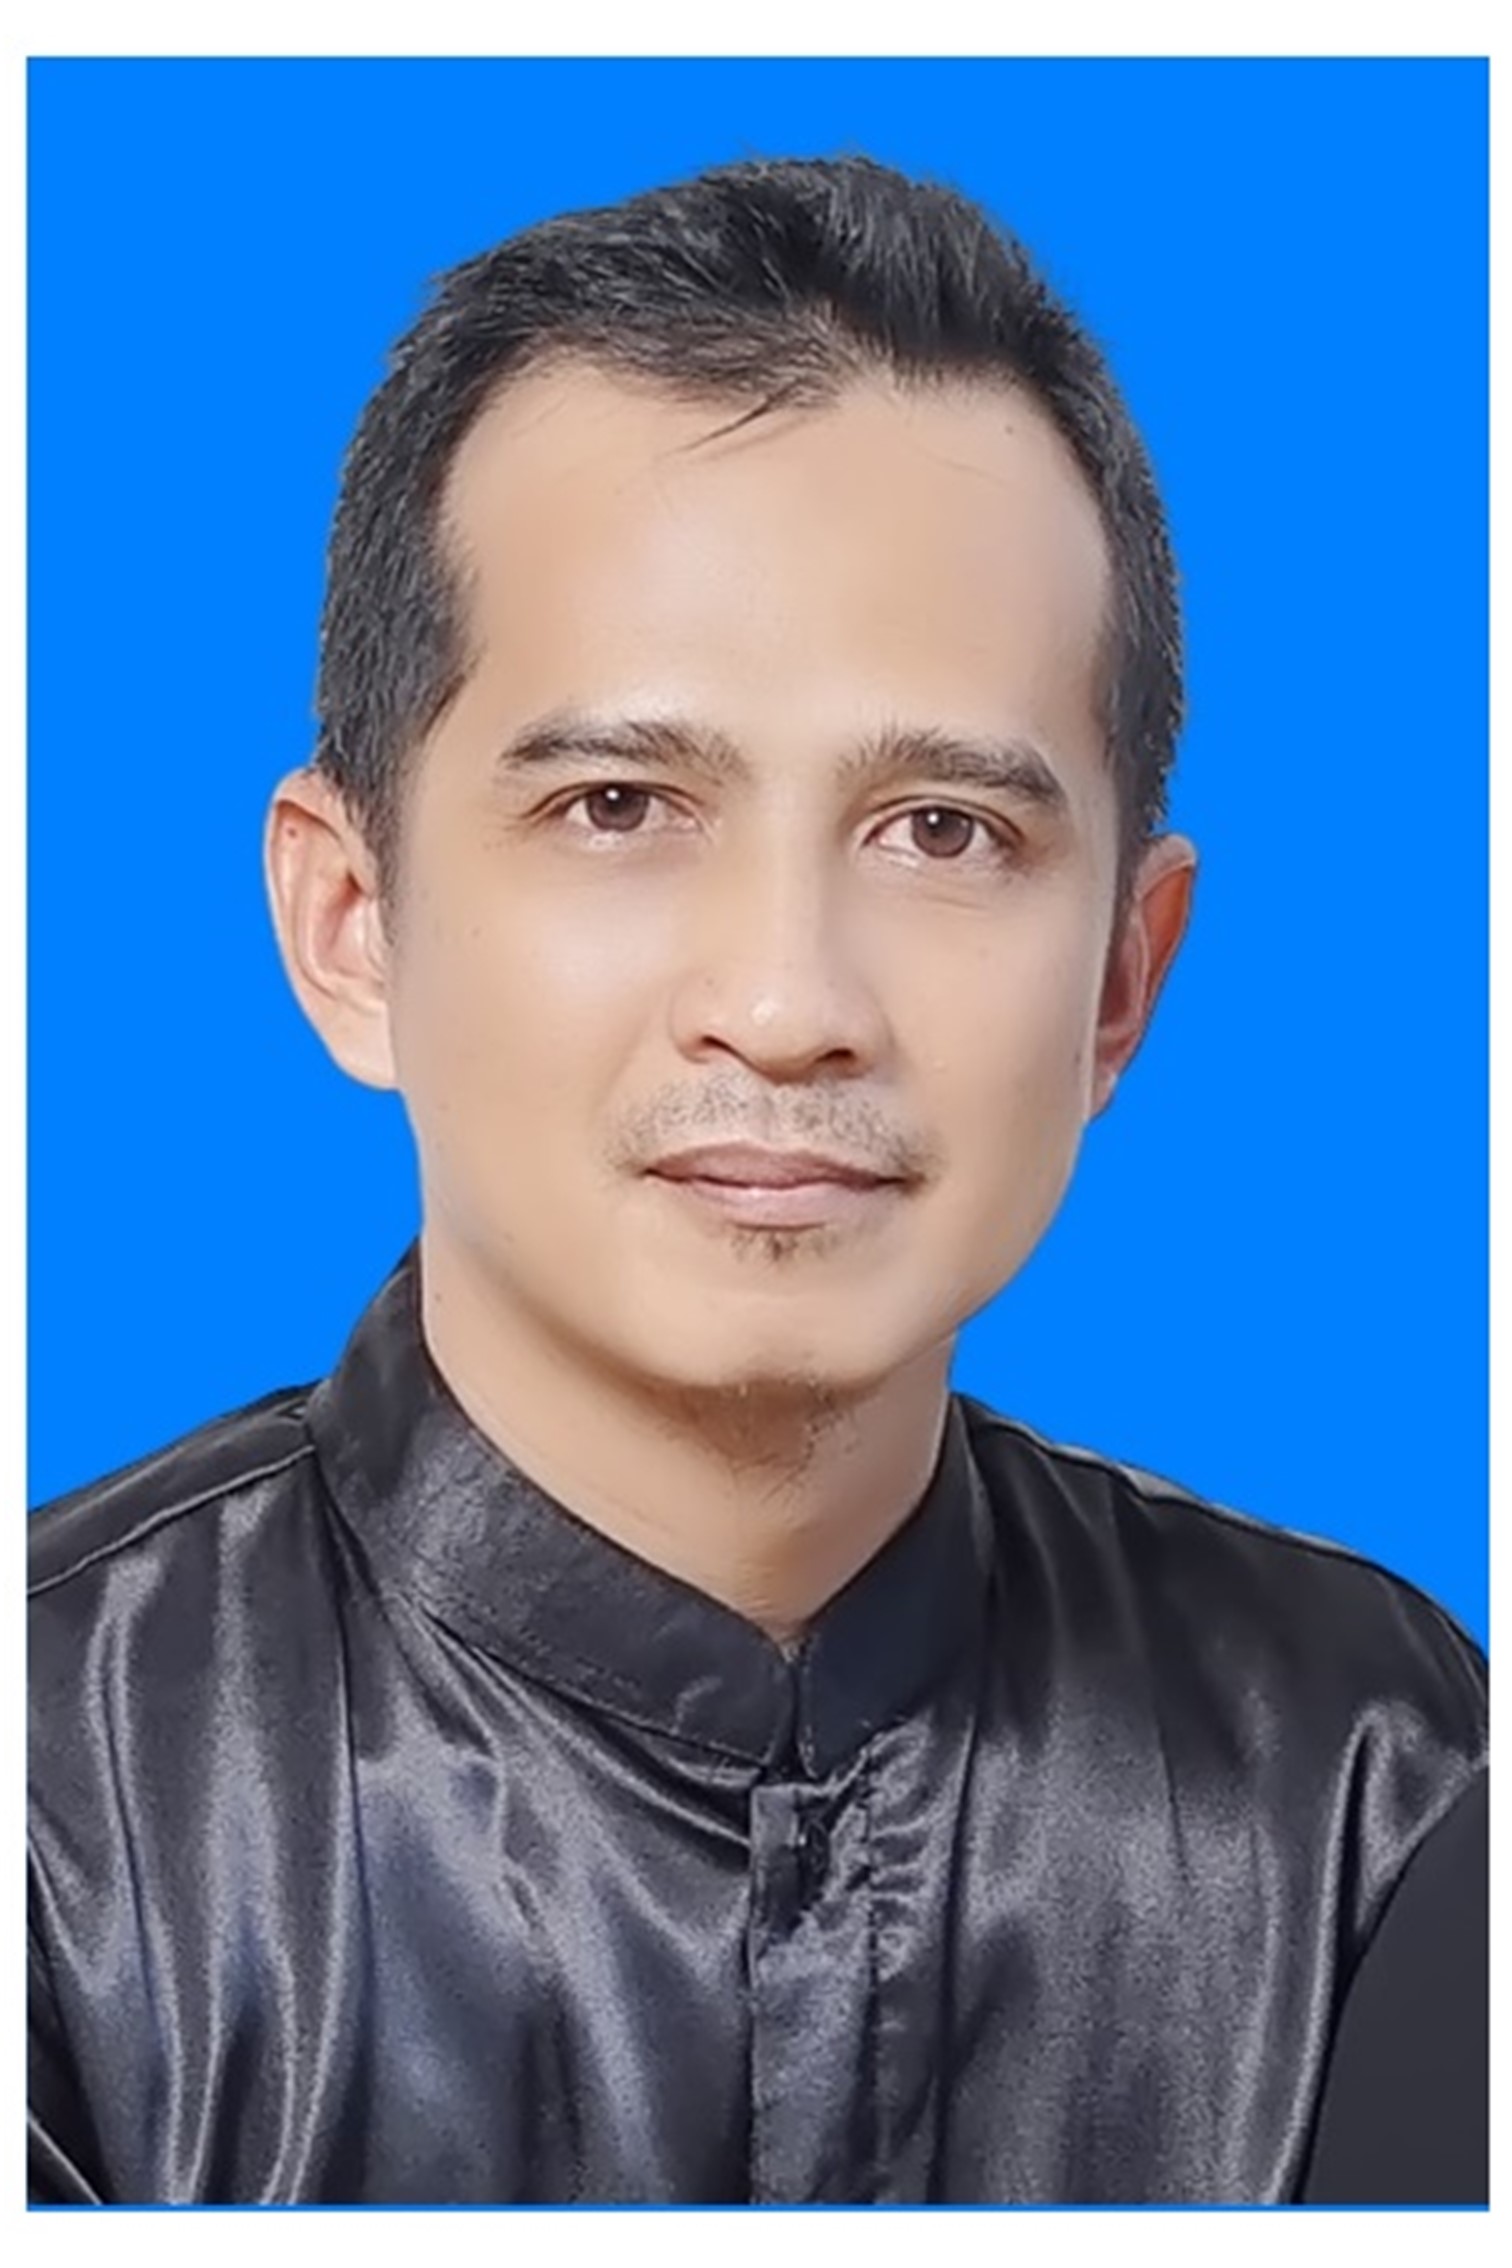 Zaldy Sirwansyah Suzen